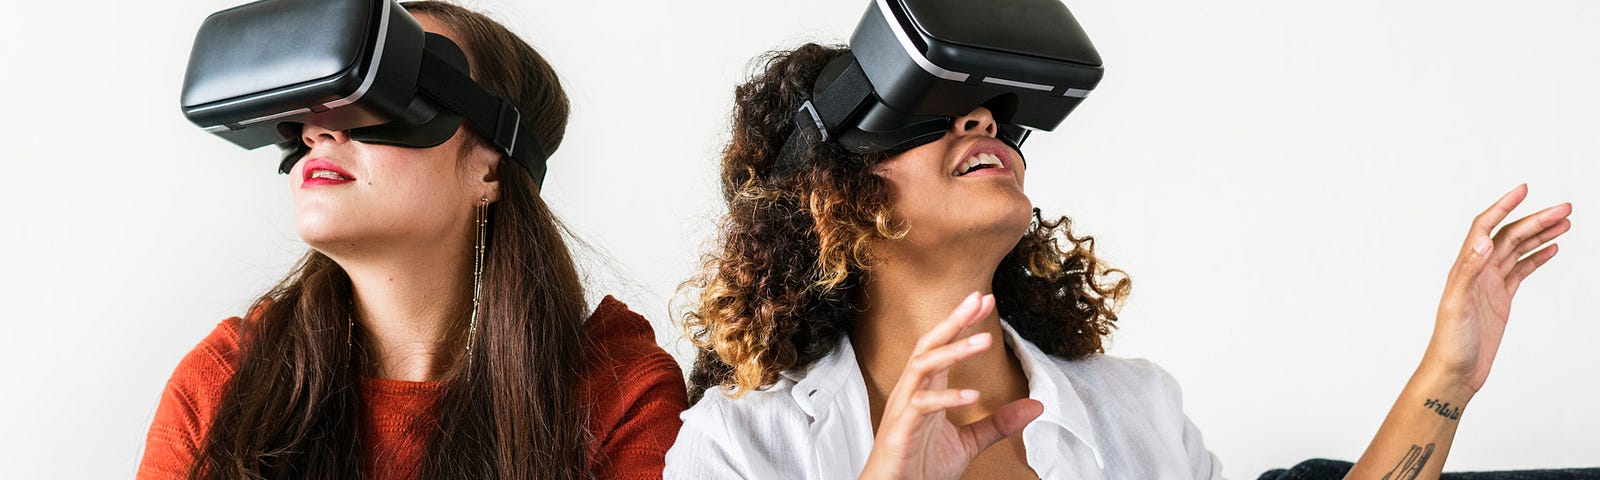 2 Women experiencing VR